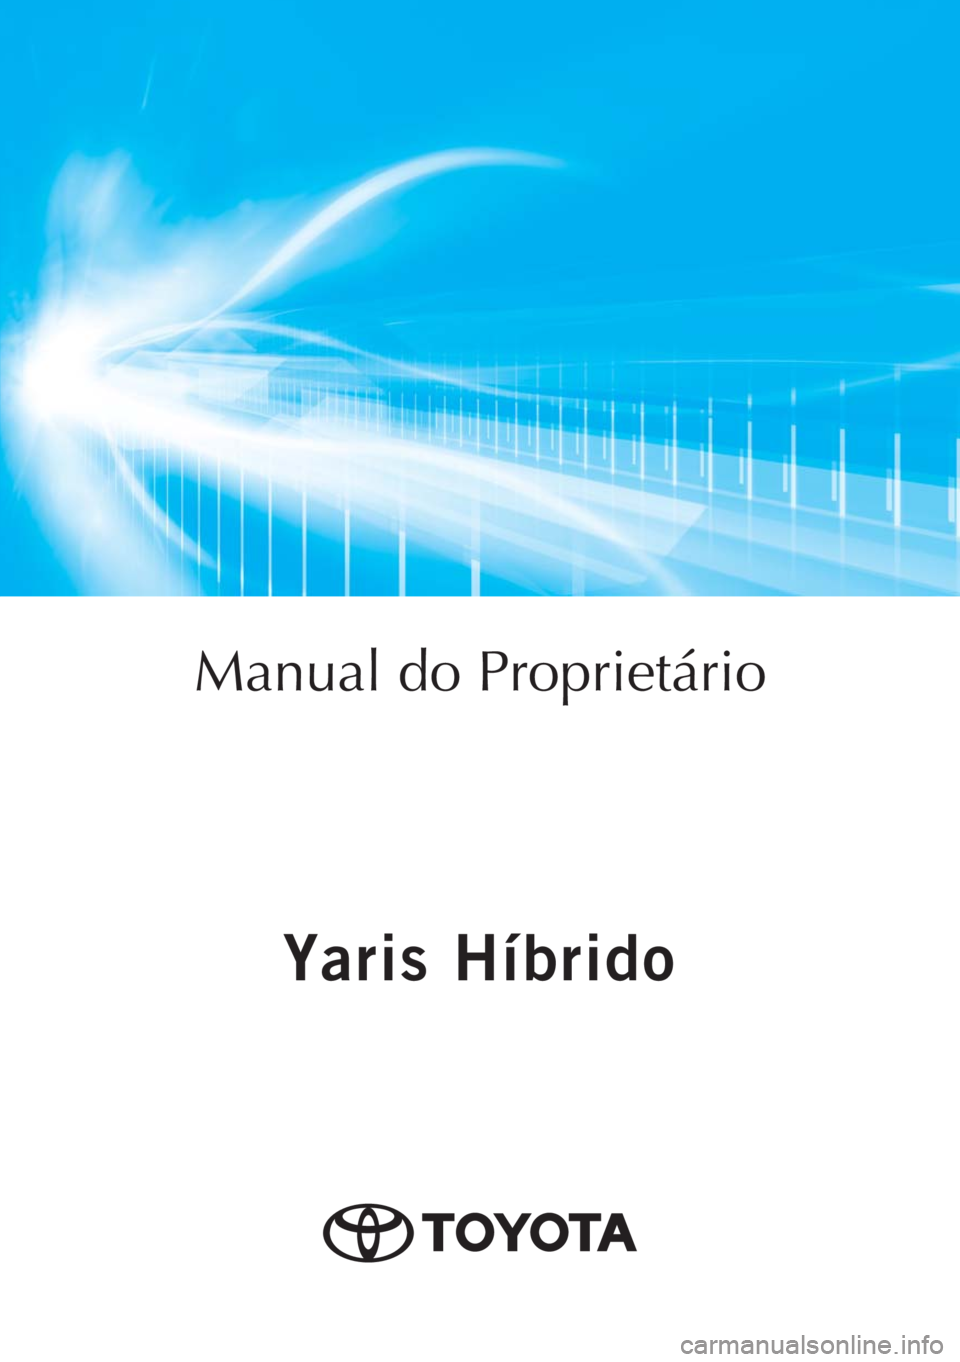 TOYOTA YARIS 2019  Manual de utilização (in Portuguese) Yaris Híbrido
Yaris Híbrido
Manual do Proprietário
Mod. OM52K29PT
Public. N.º OM52K29E
ORGAL-PORTOToyota Caetano Portugal, S.A. 